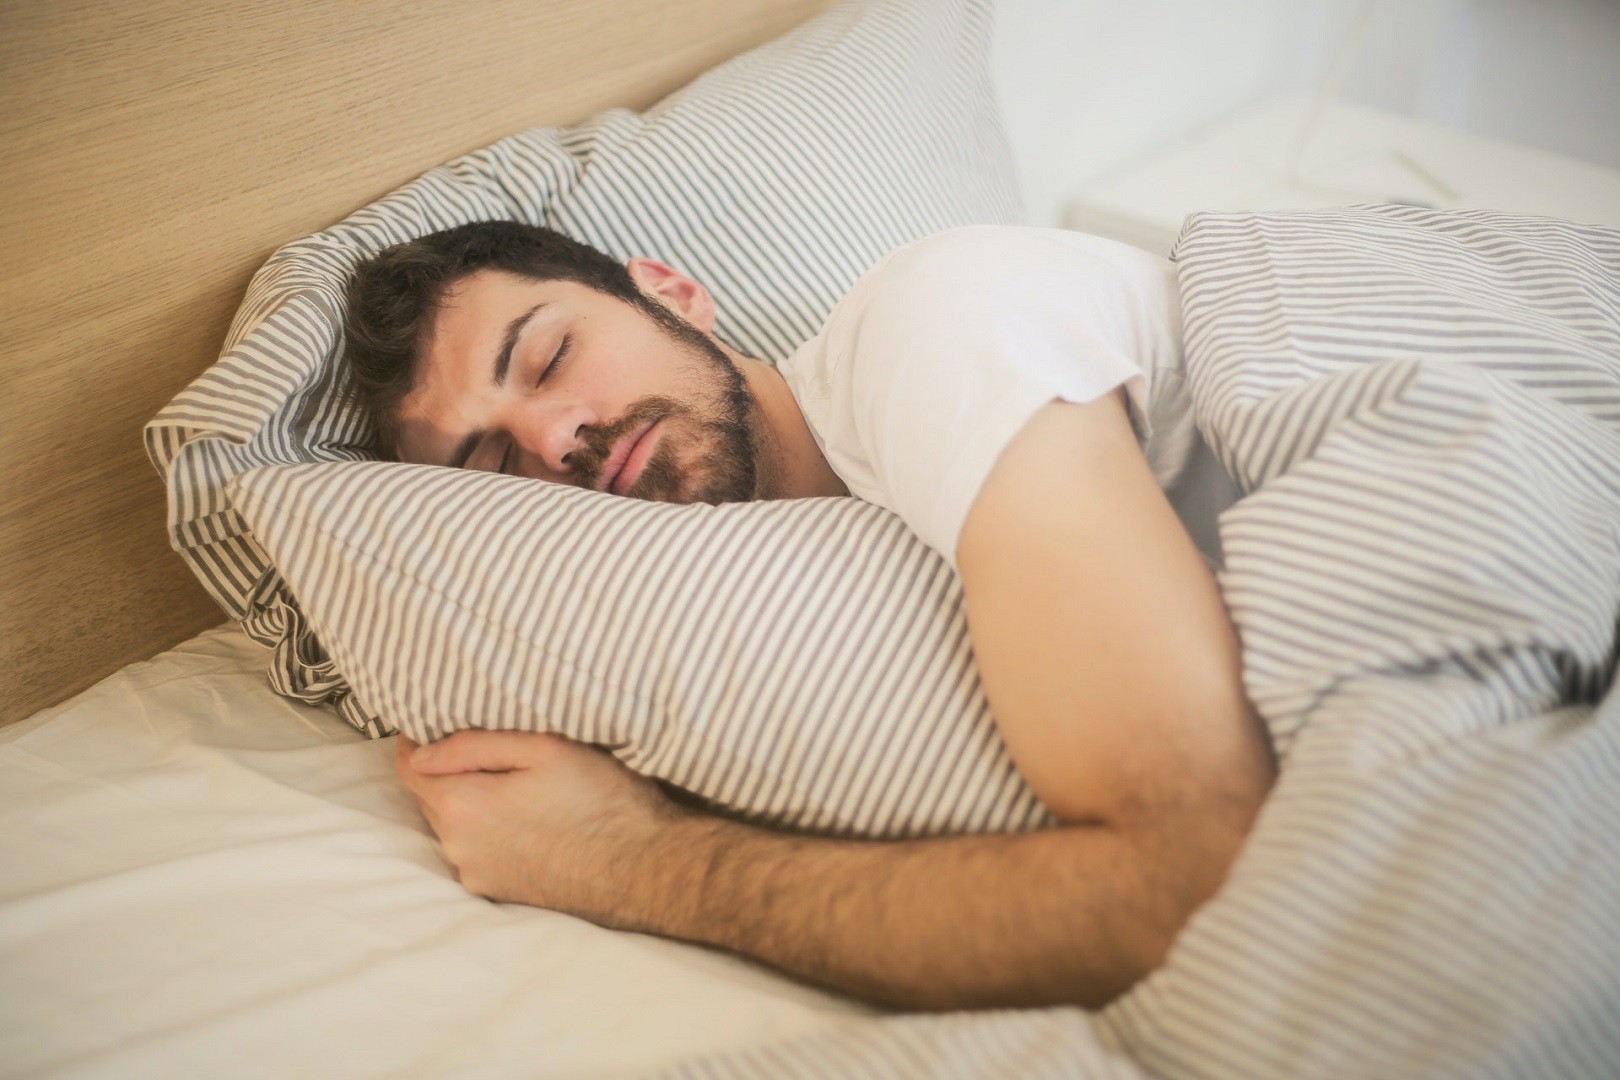 How Much Sleep Do You Really Need?